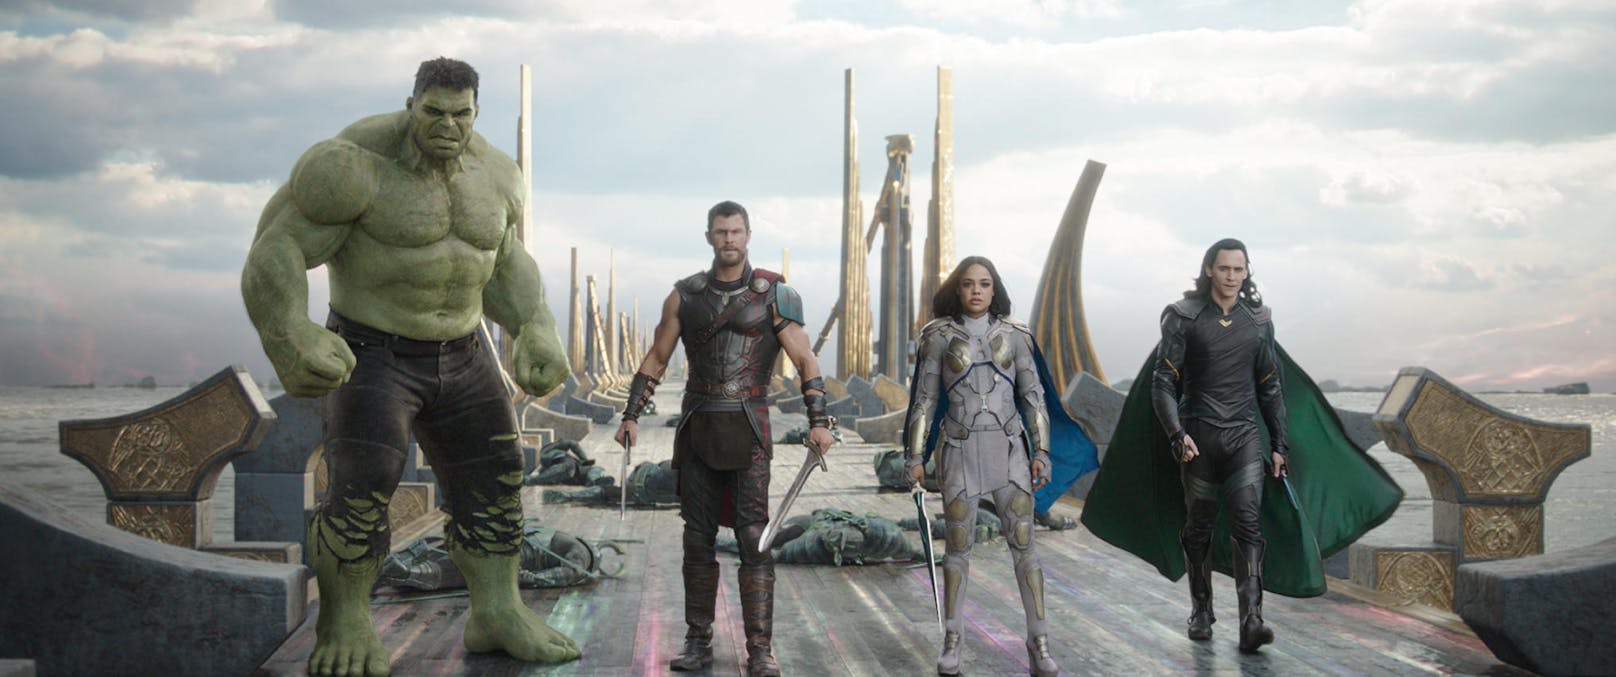 Von links: Hulk (Mark Ruffalo), Thor (Chris Hemsworth), Valkyrie (Tessa Thompson) and Loki (Tom Hiddleston)